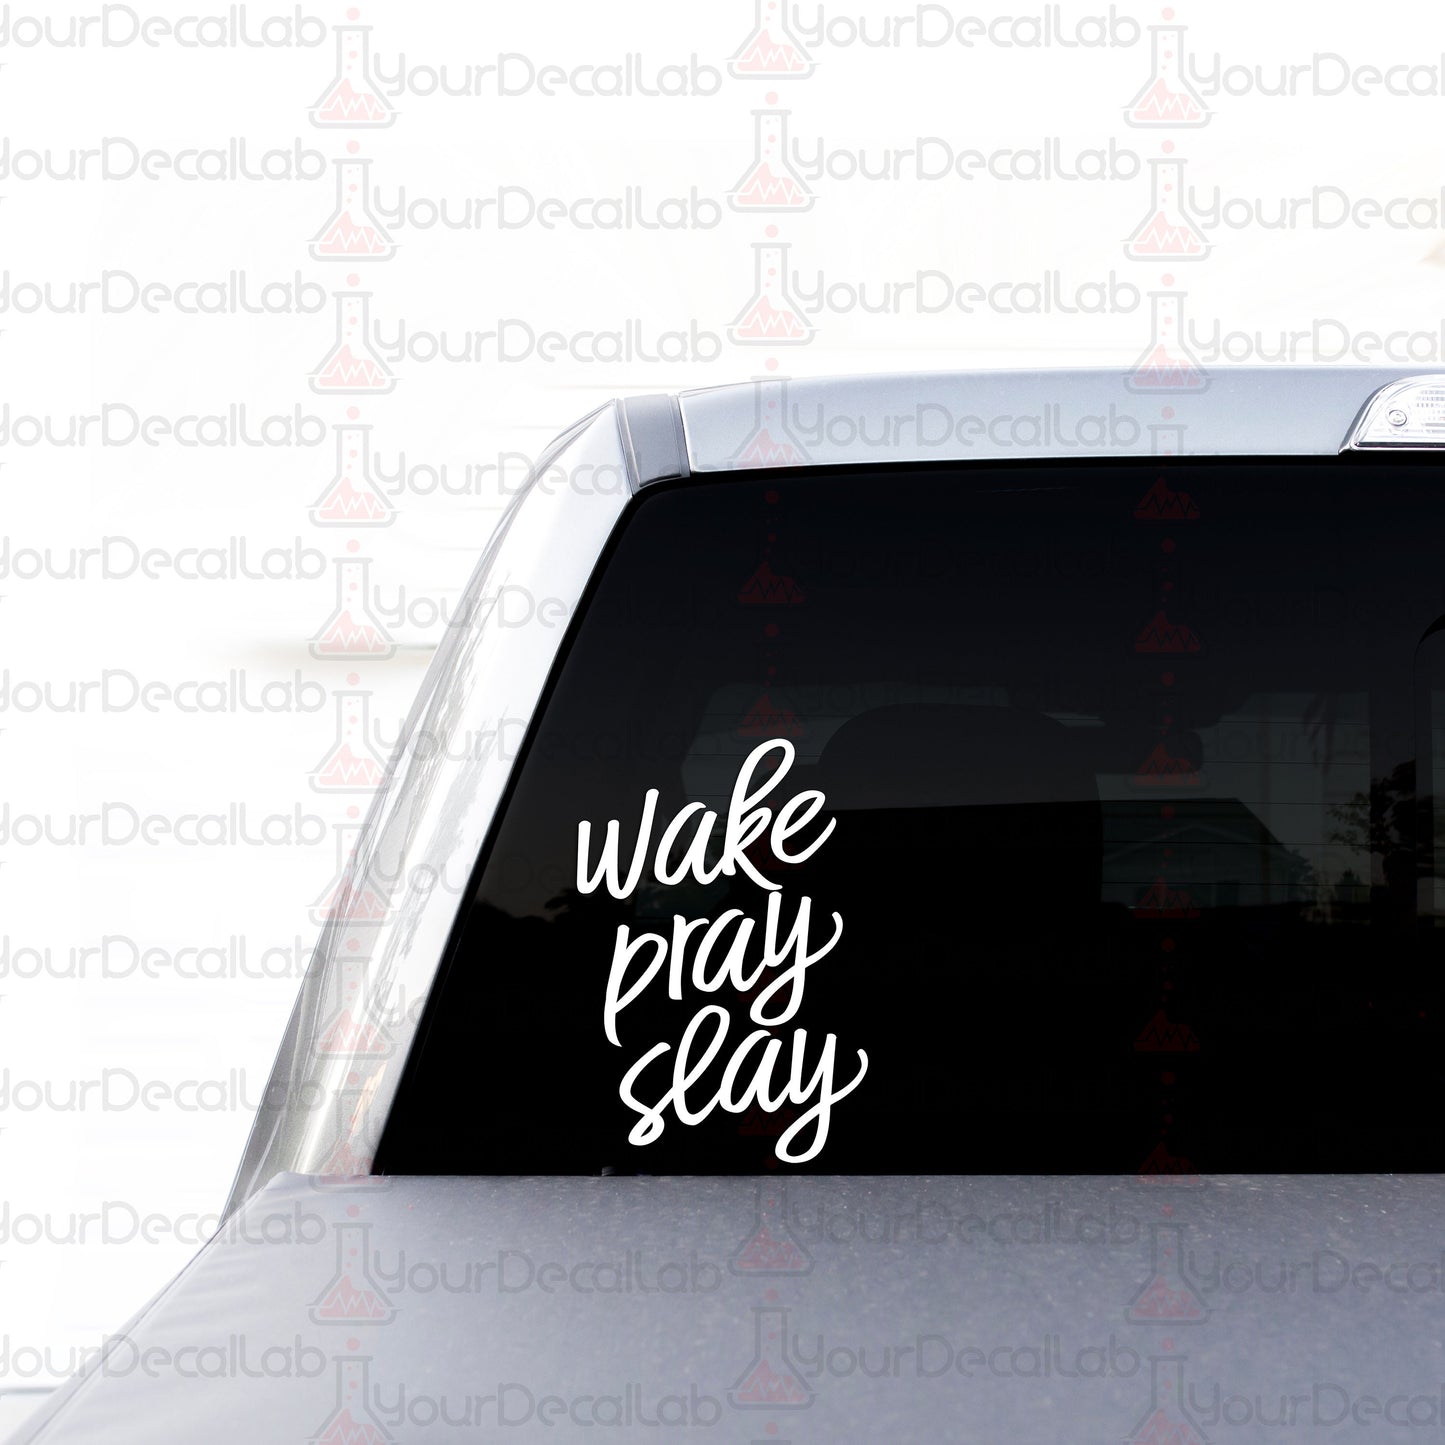 a car with a sticker that says wake pray slay